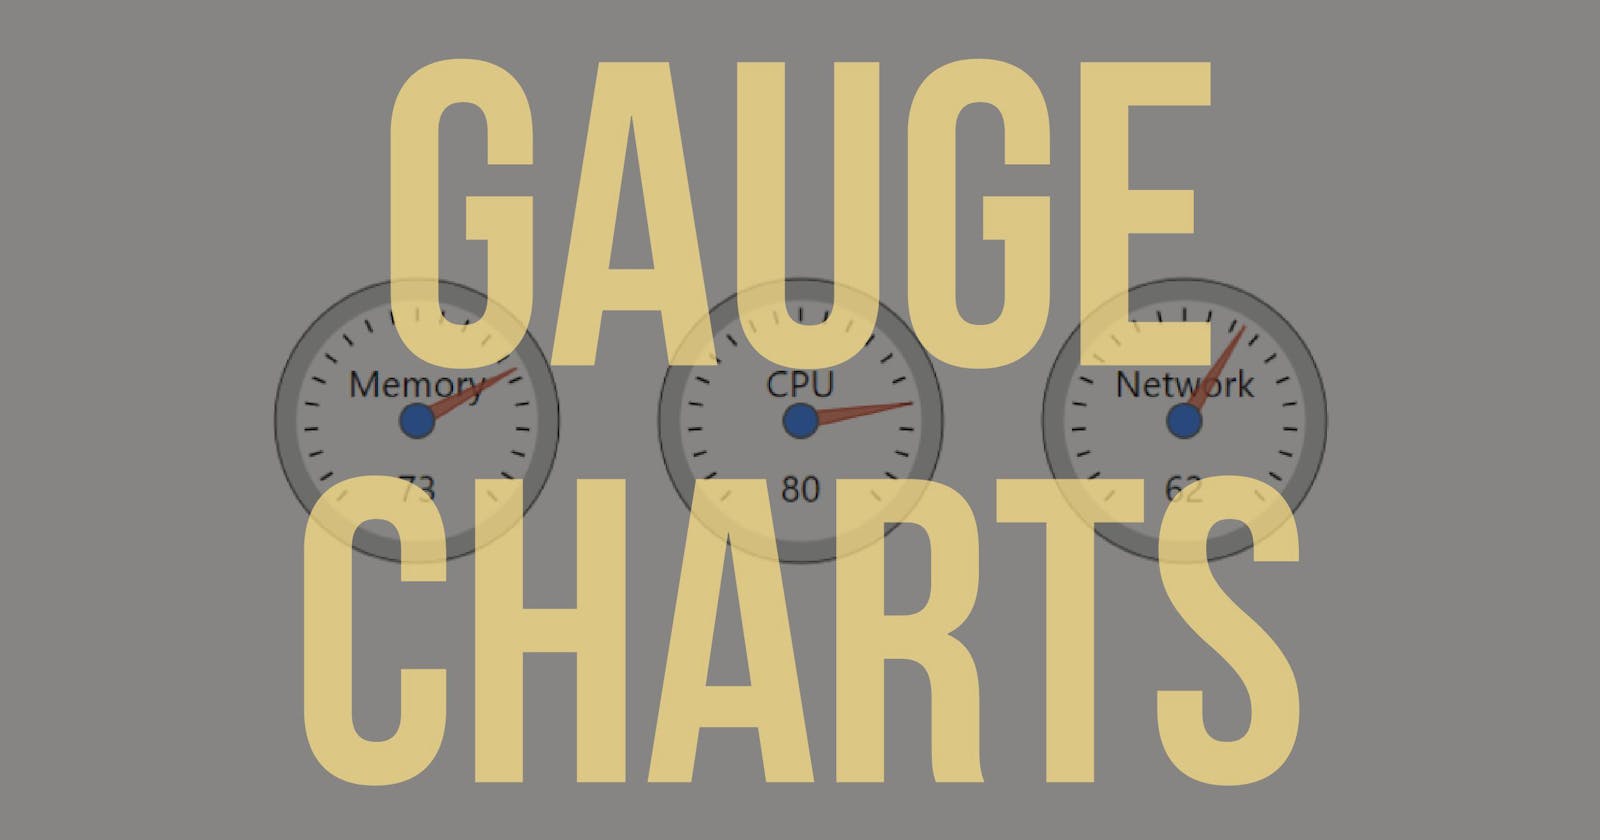 Google-style gauge charts using D3